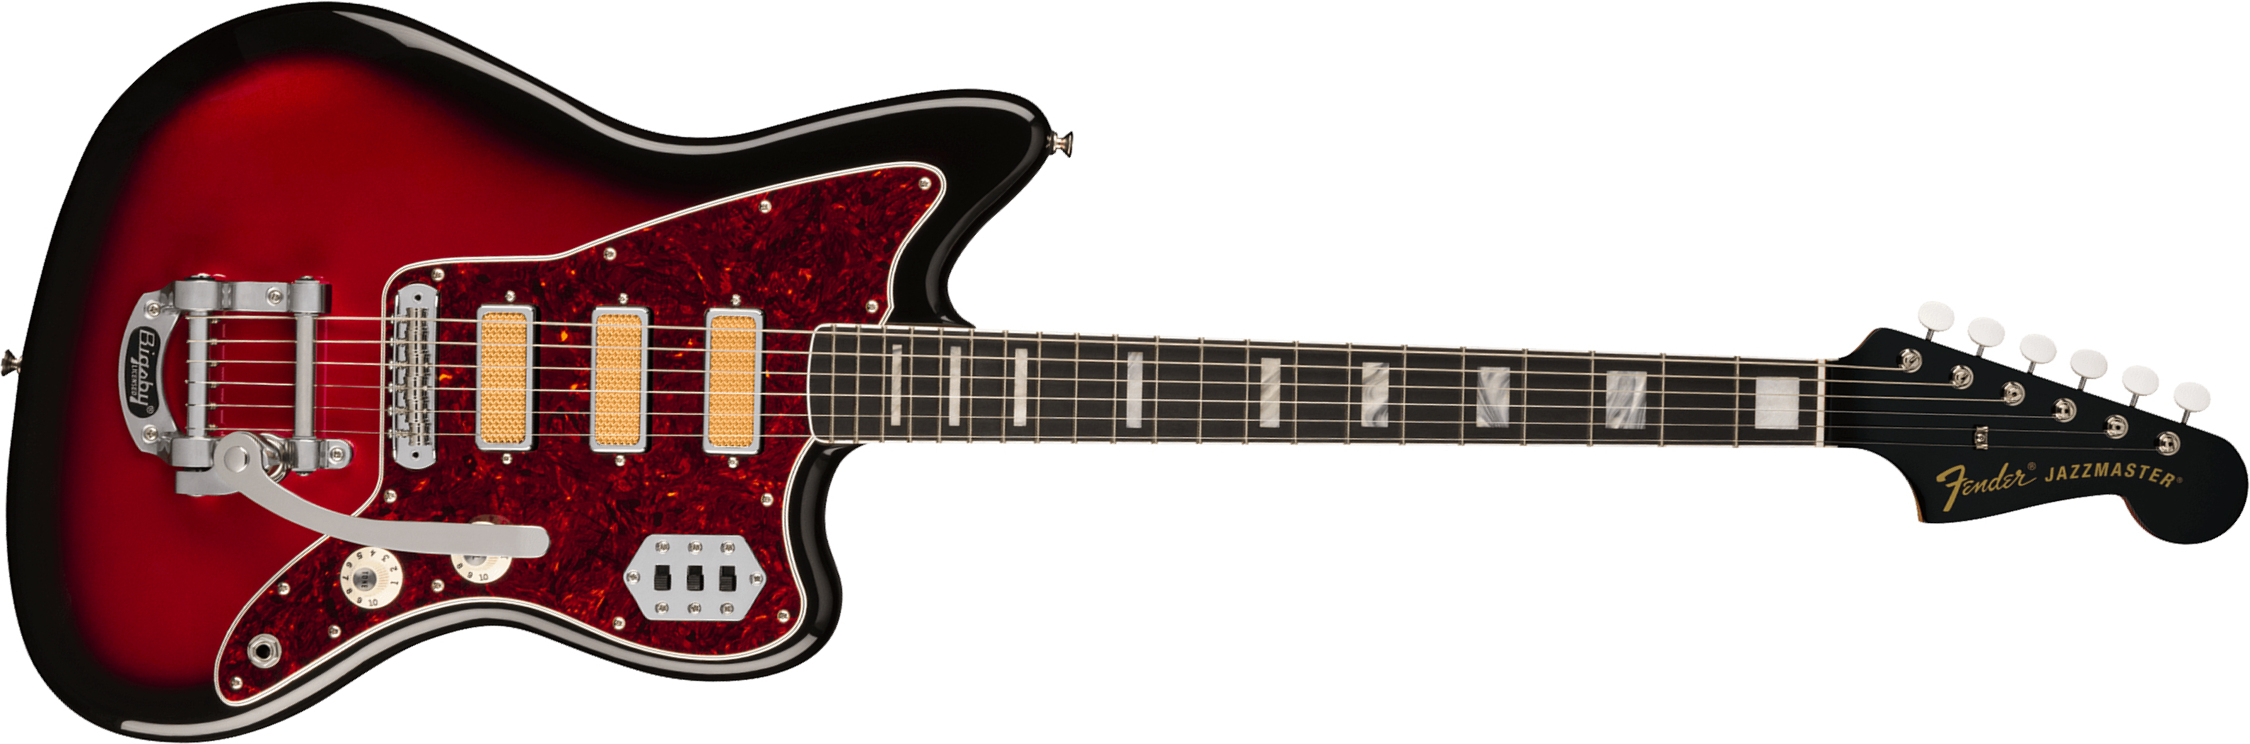 Fender Jazzmaster Gold Foil Ltd Mex 3mh Trem Bigsby Eb - Candy Apple Burst - Retro-Rock-E-Gitarre - Main picture